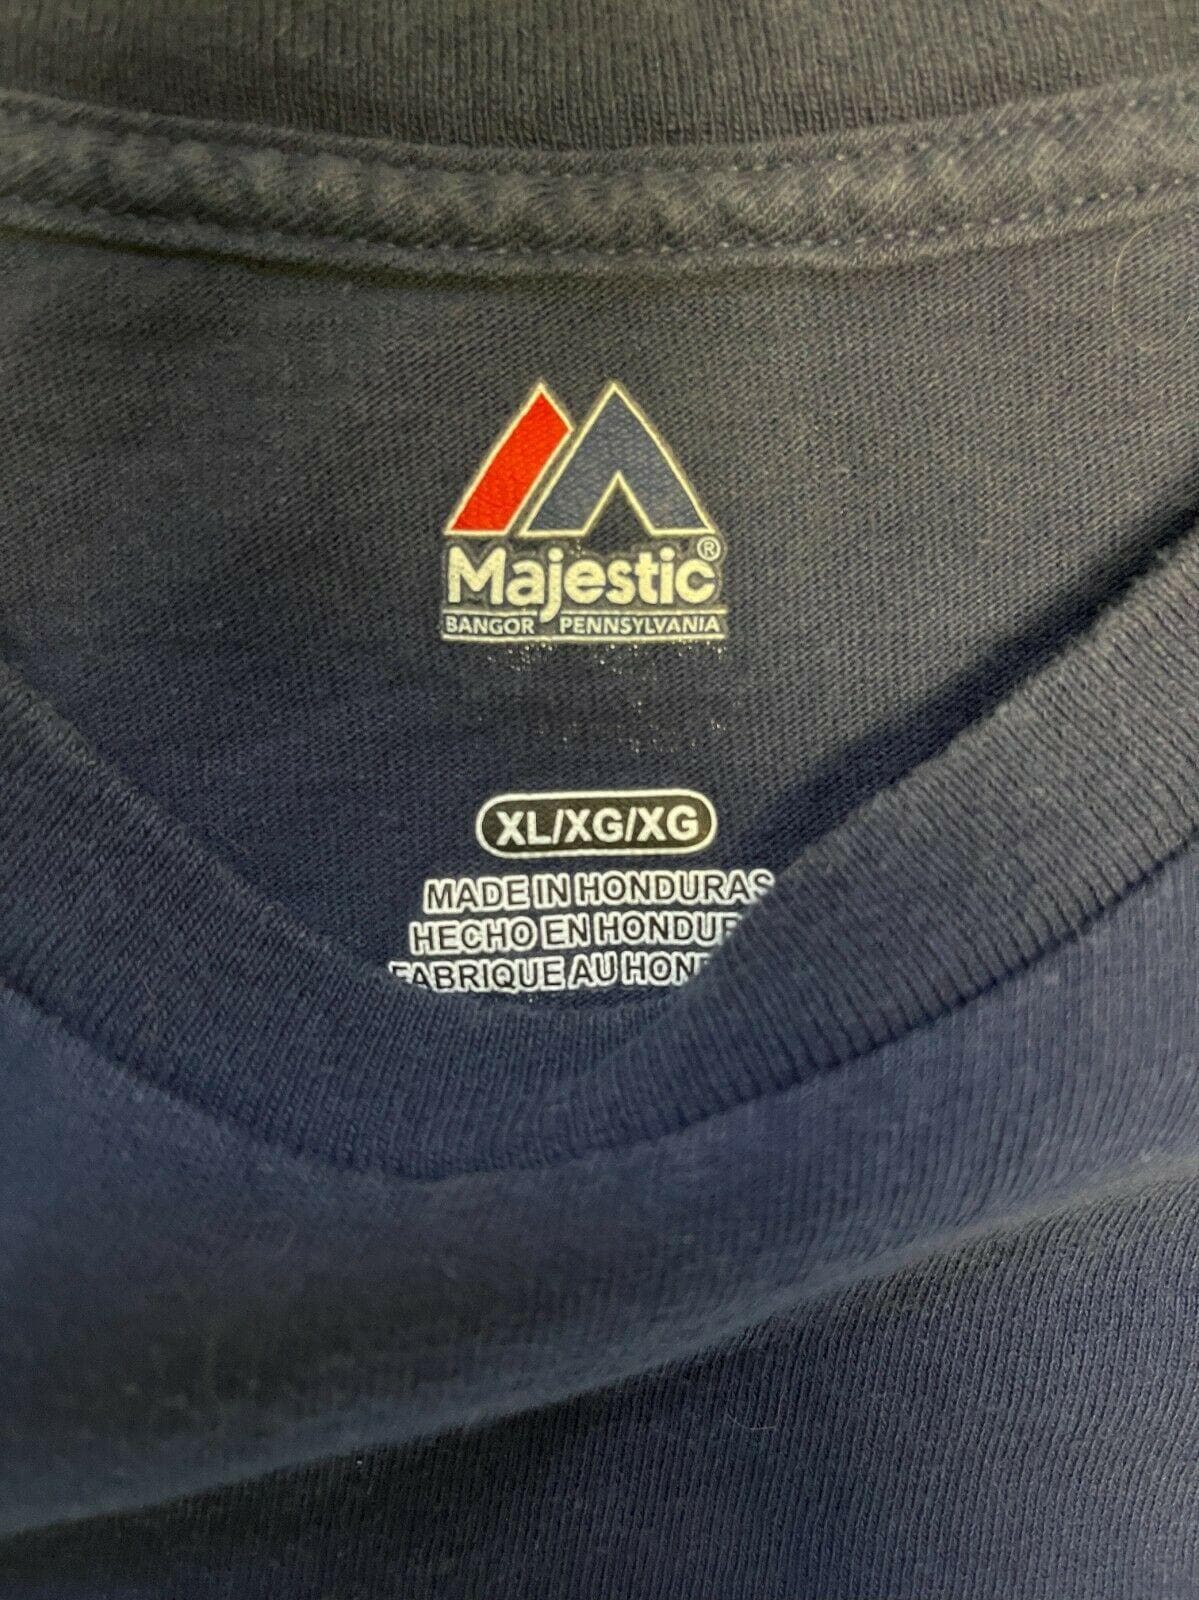 MLB San Diego Padres Yonder Alonso #23 Majestic T-Shirt Men's X-Large